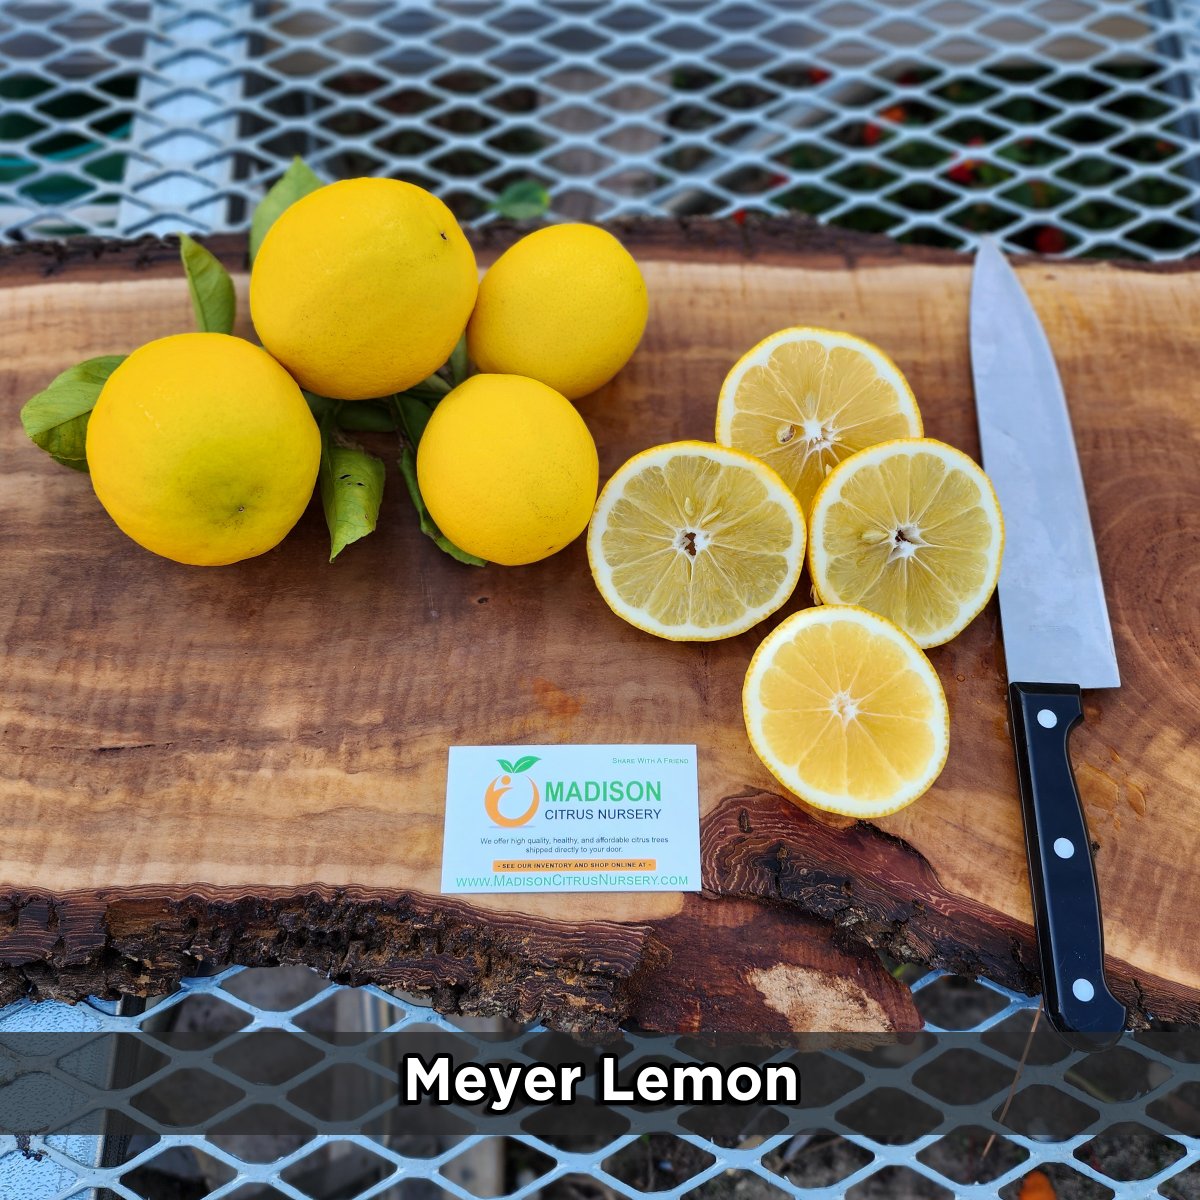 Meyer Lemon Citrus Trees for sale, available in 1 gallon, 3 gallon and dwarf sizes. madisoncitrusnursery.com/search?q=meyer… #meyerlemon #lemontrees #citrustrees #madisoncitrus